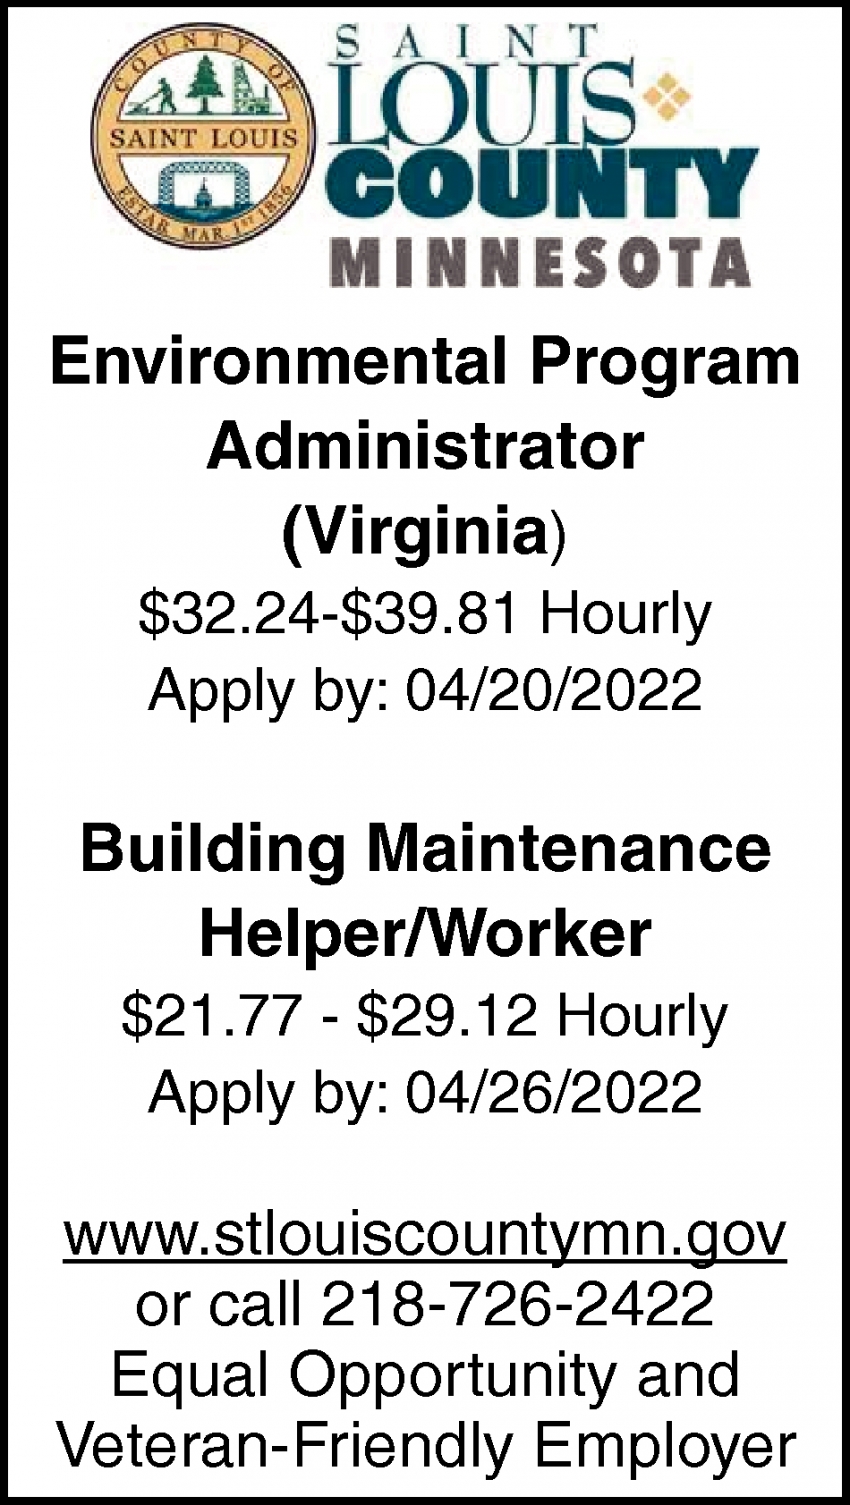 Environmental Program Administrator, Building Maintenance Helper/Worker